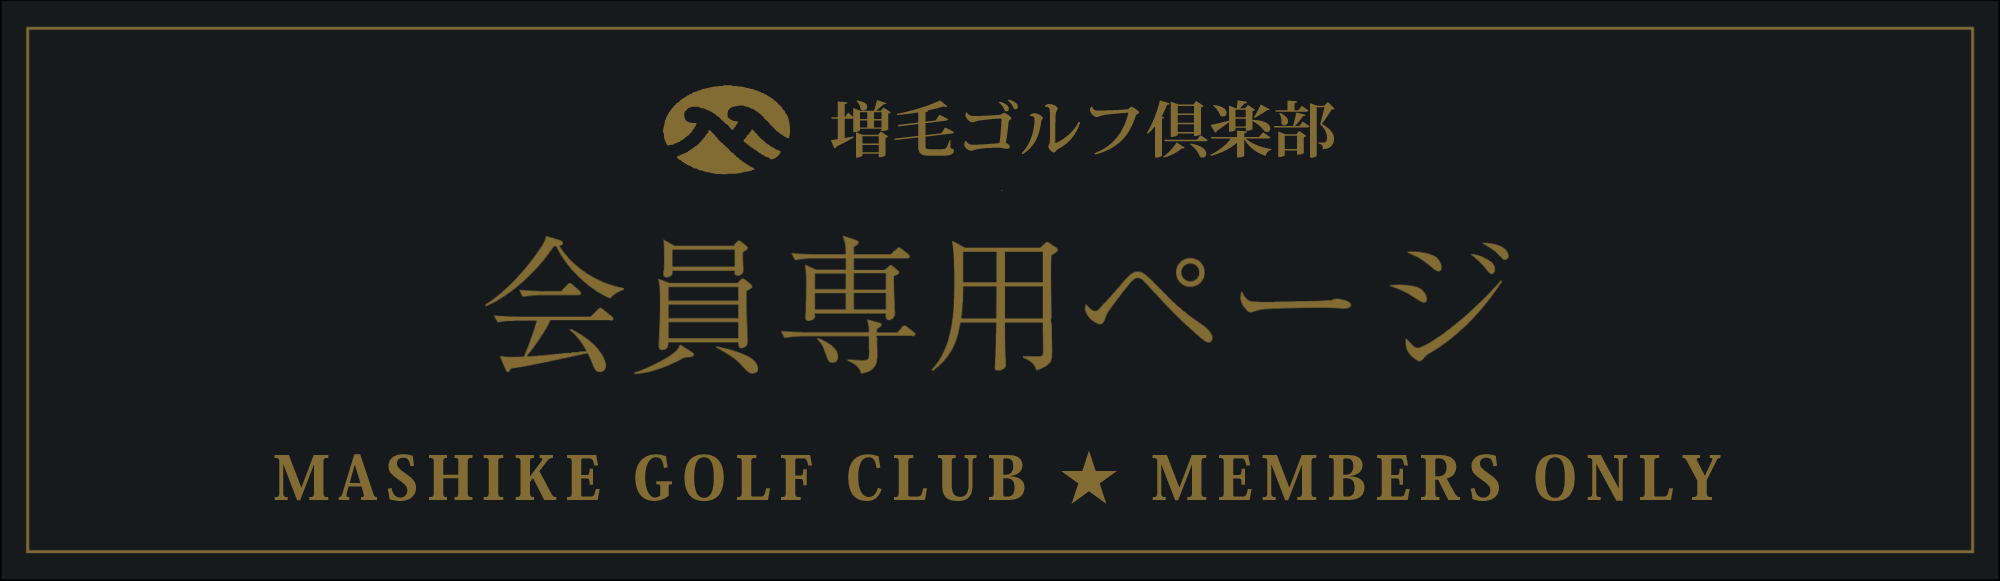 members_mashike